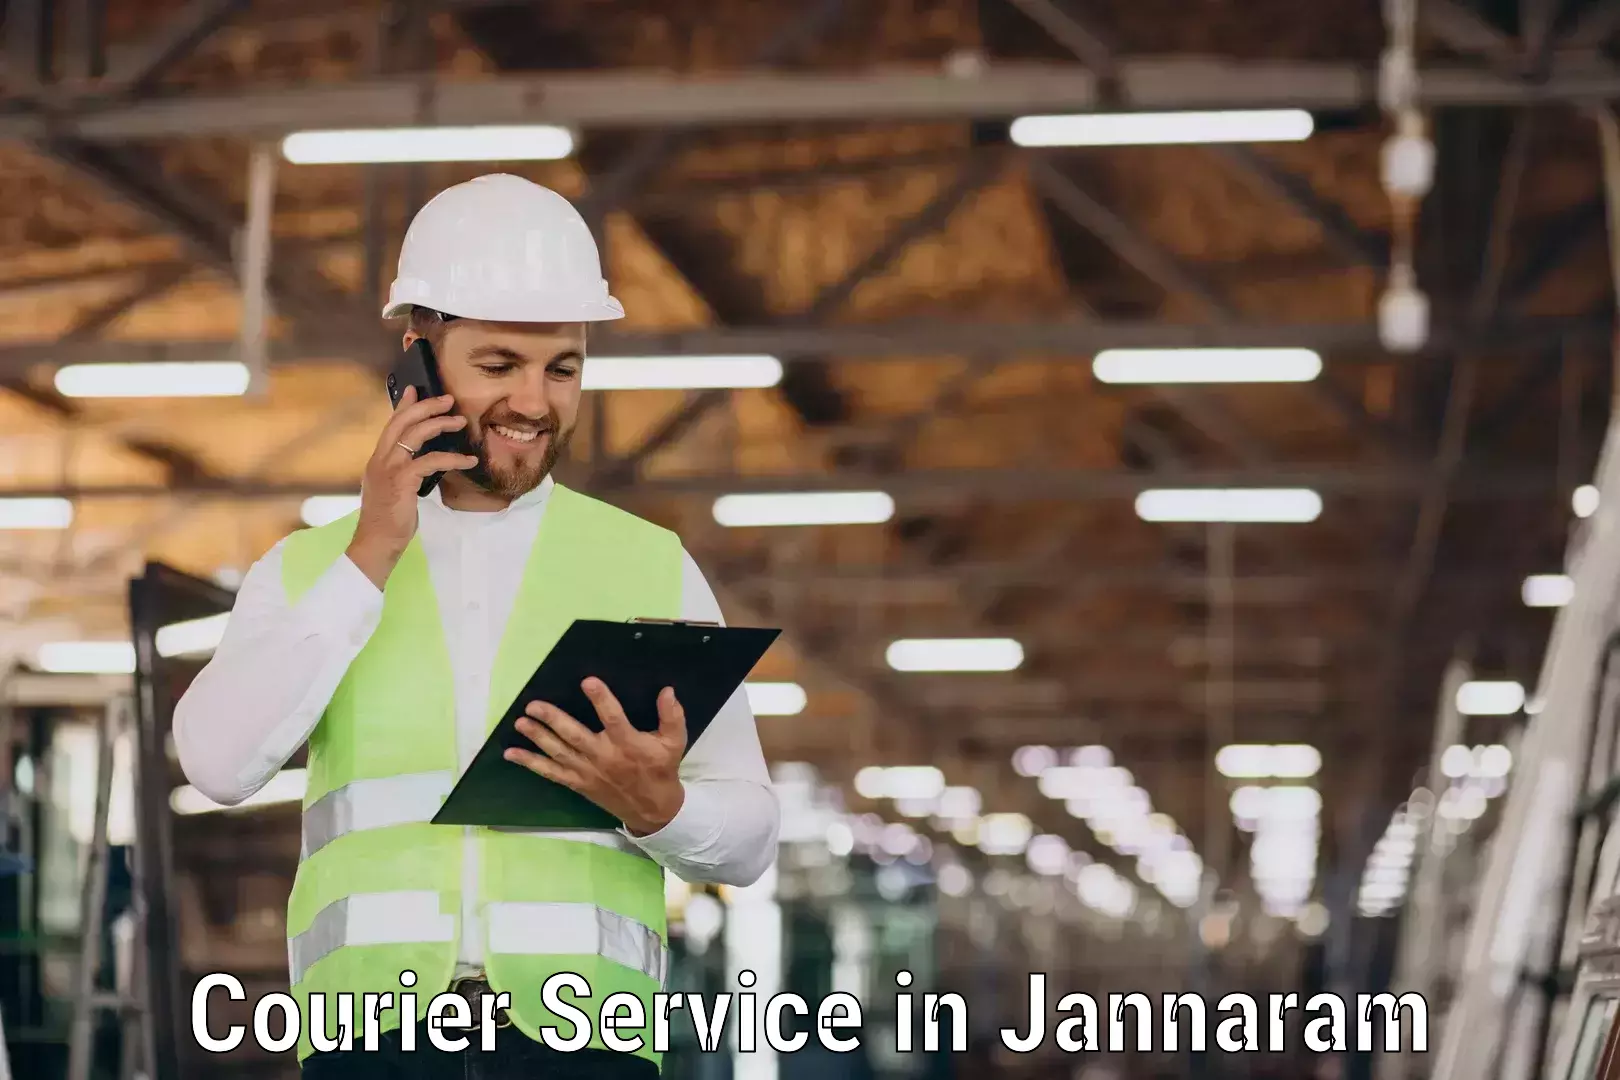 Seamless shipping experience in Jannaram